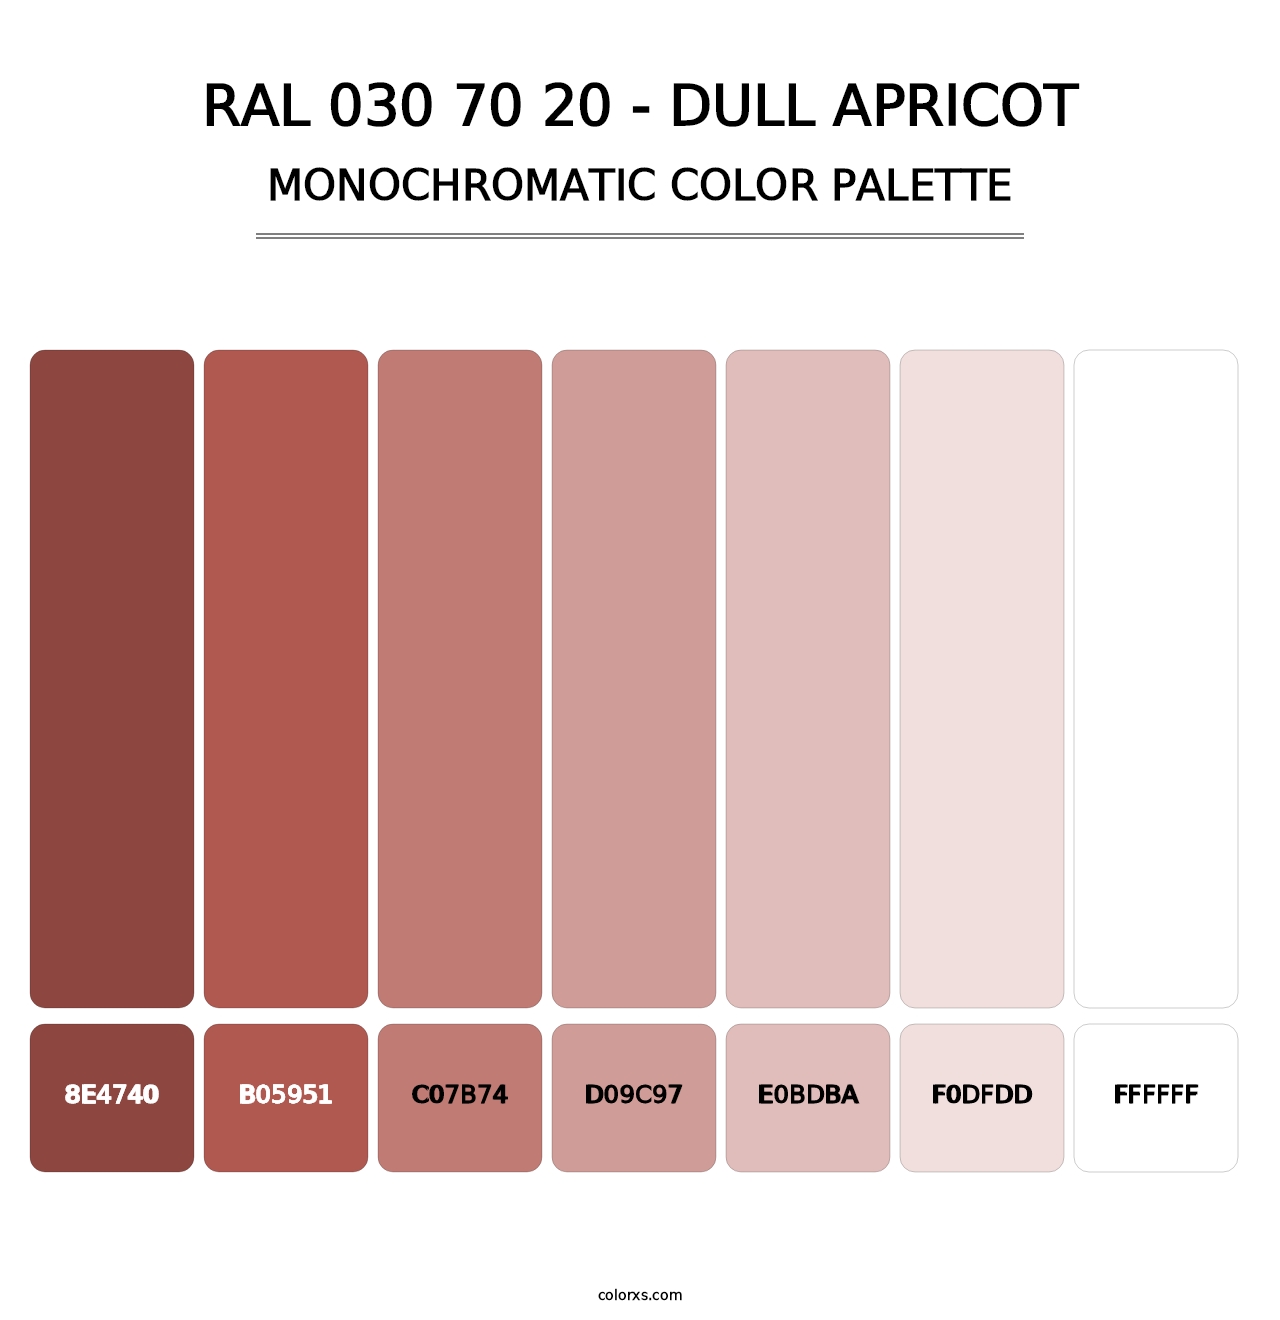 RAL 030 70 20 - Dull Apricot - Monochromatic Color Palette